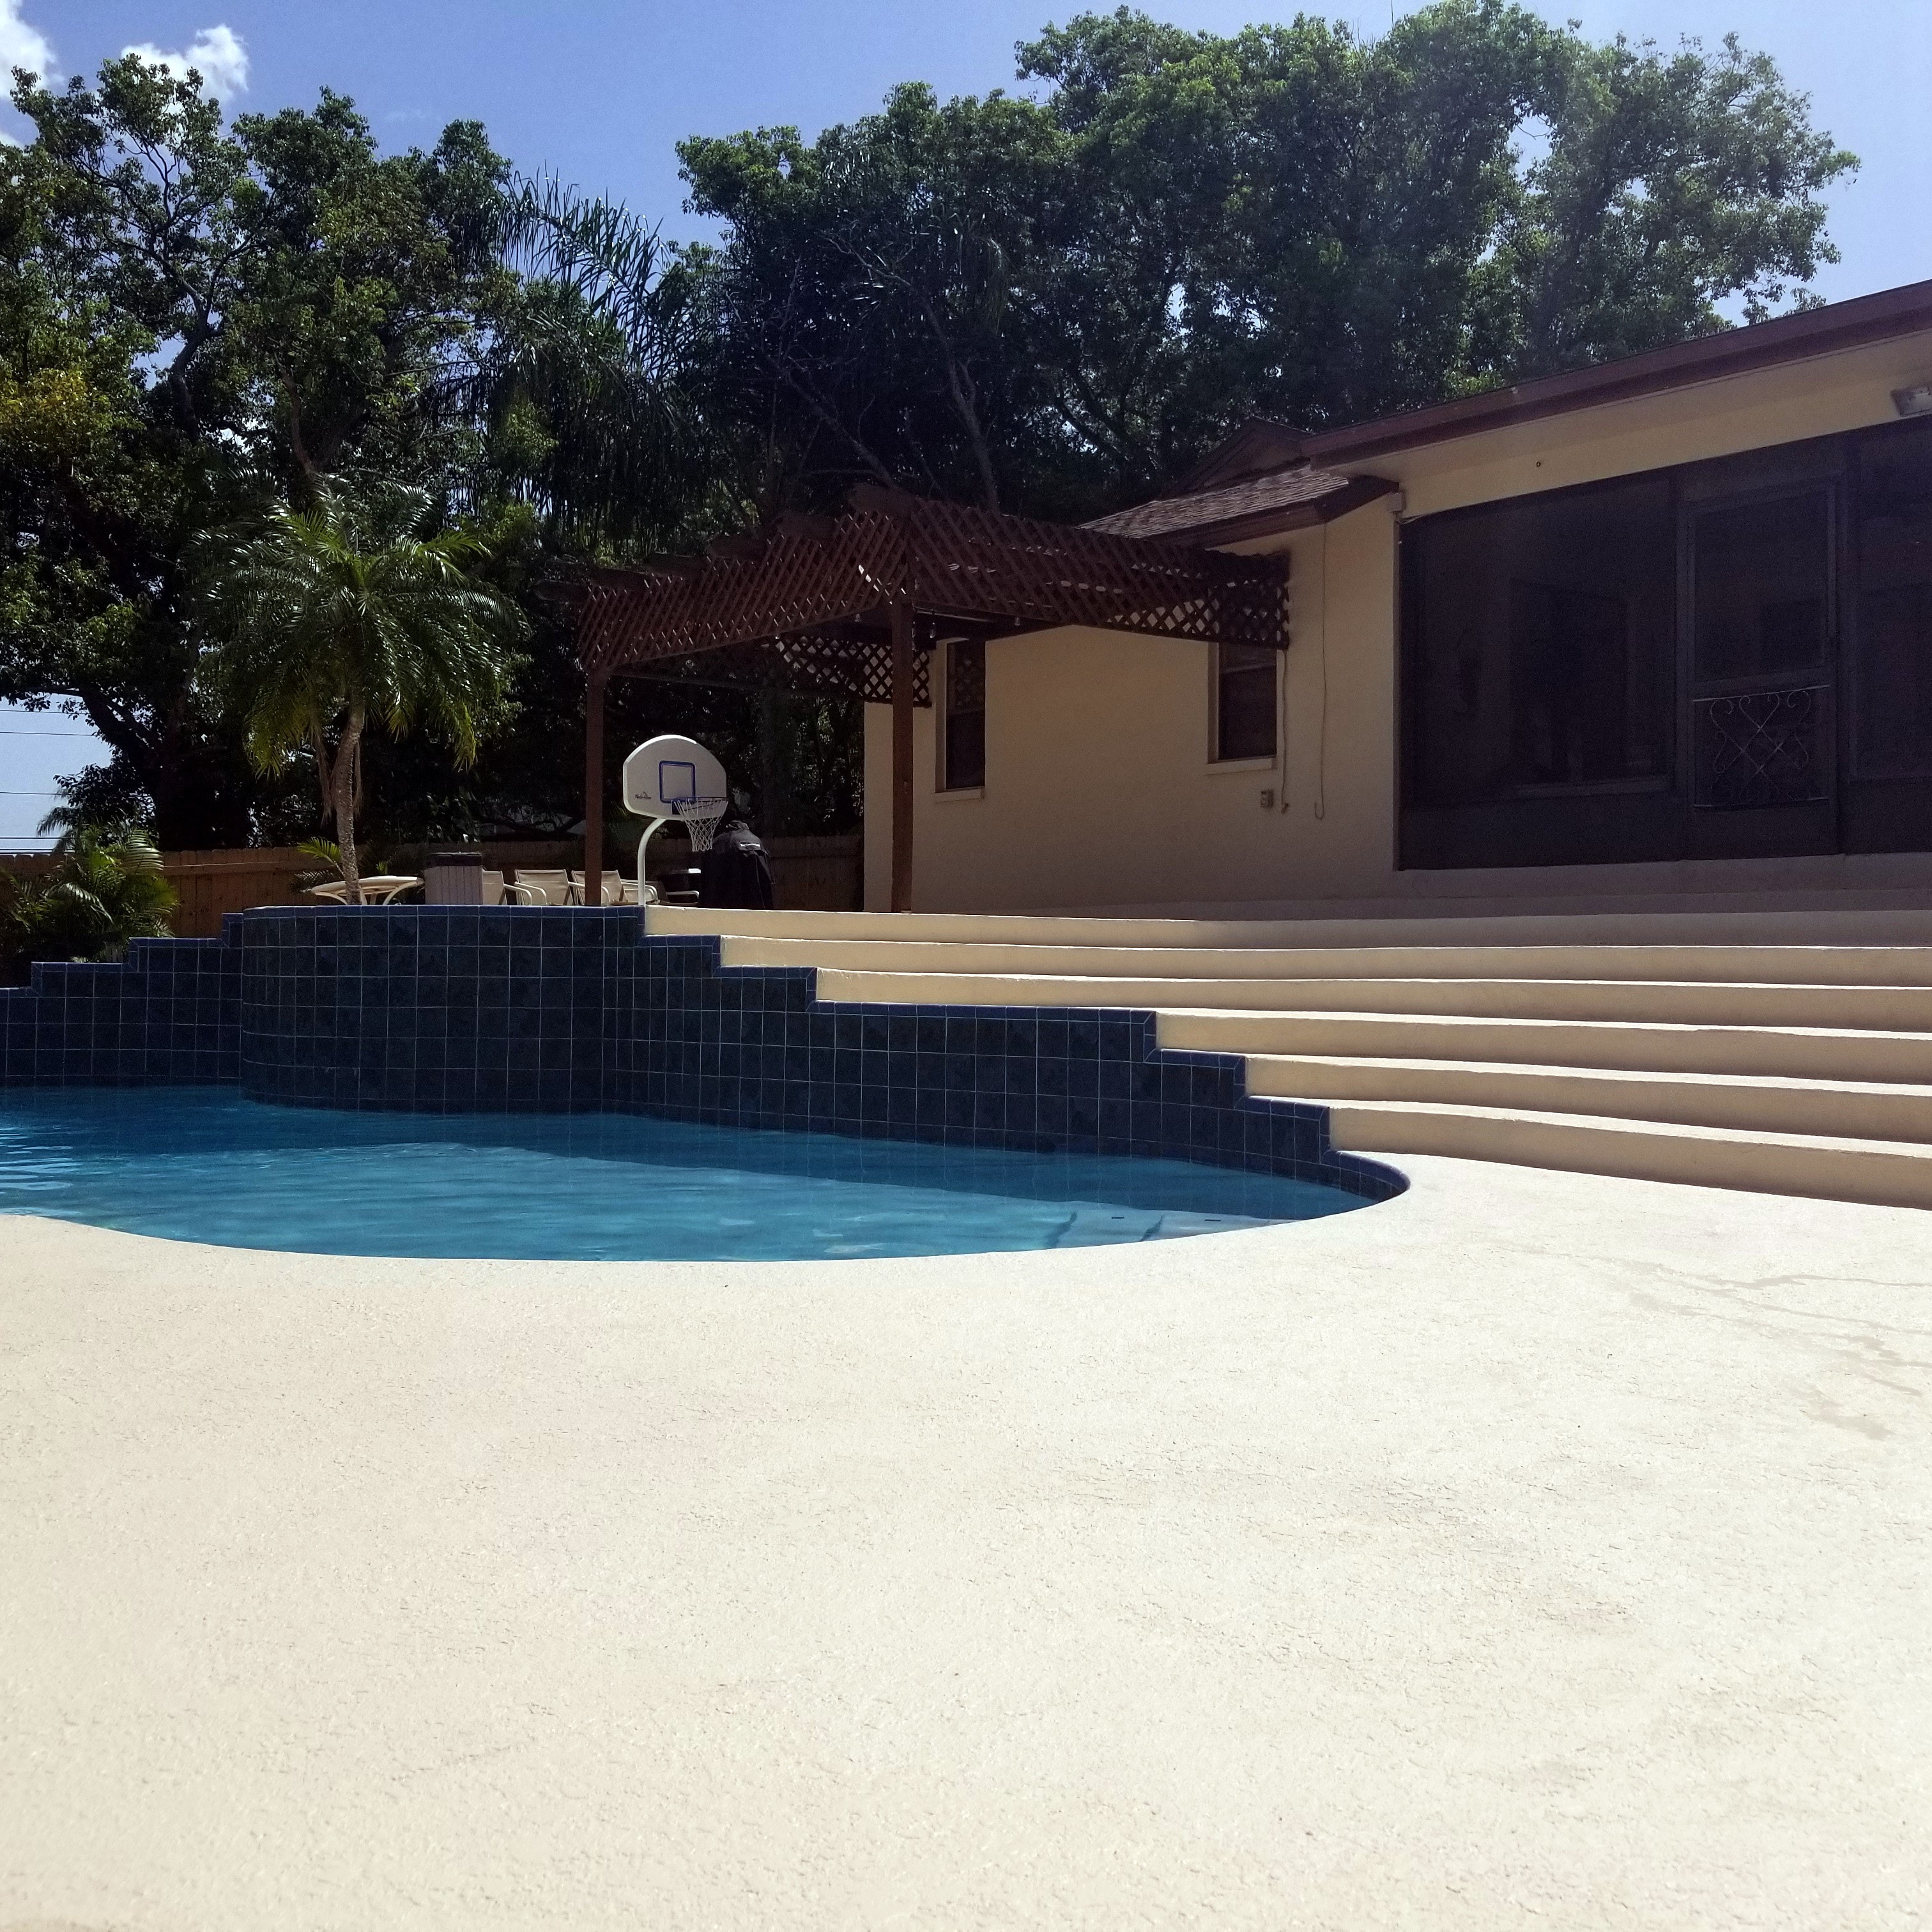 Resurfaced concrete pool deck